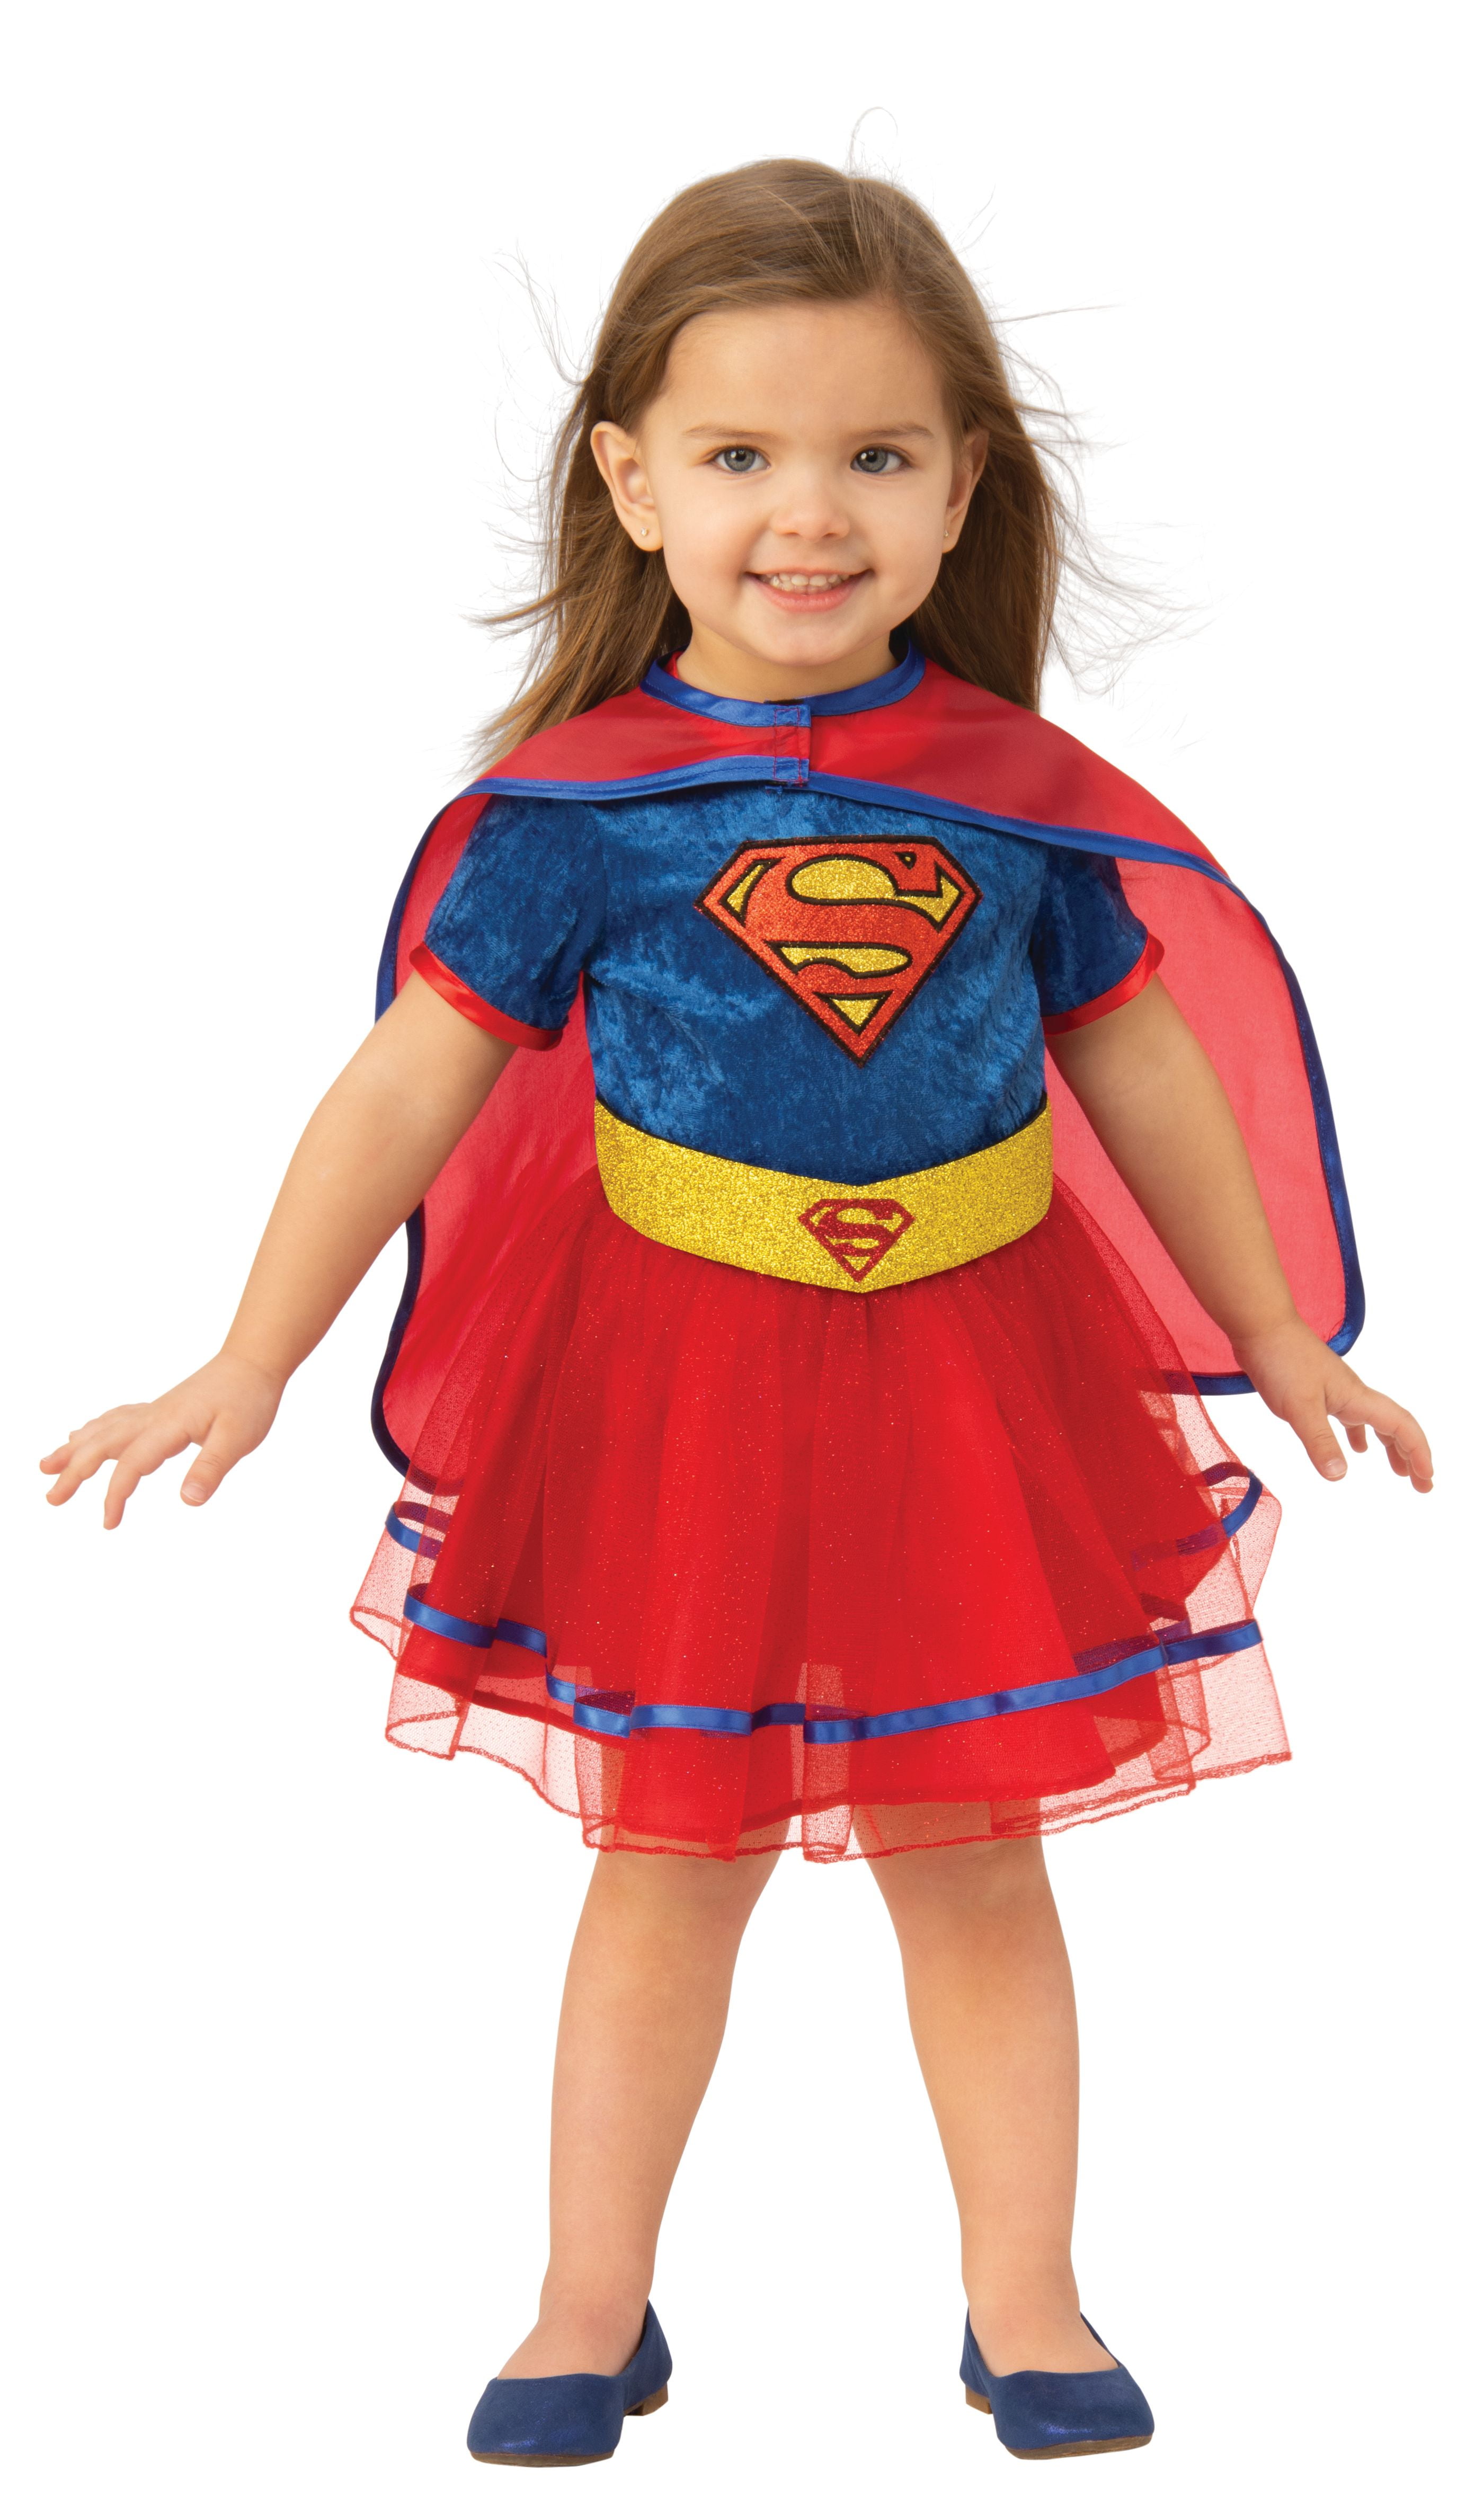 Rubies Costume Co. Supergirl Red Toddler Tutu - Walmart.com - Walmart.com